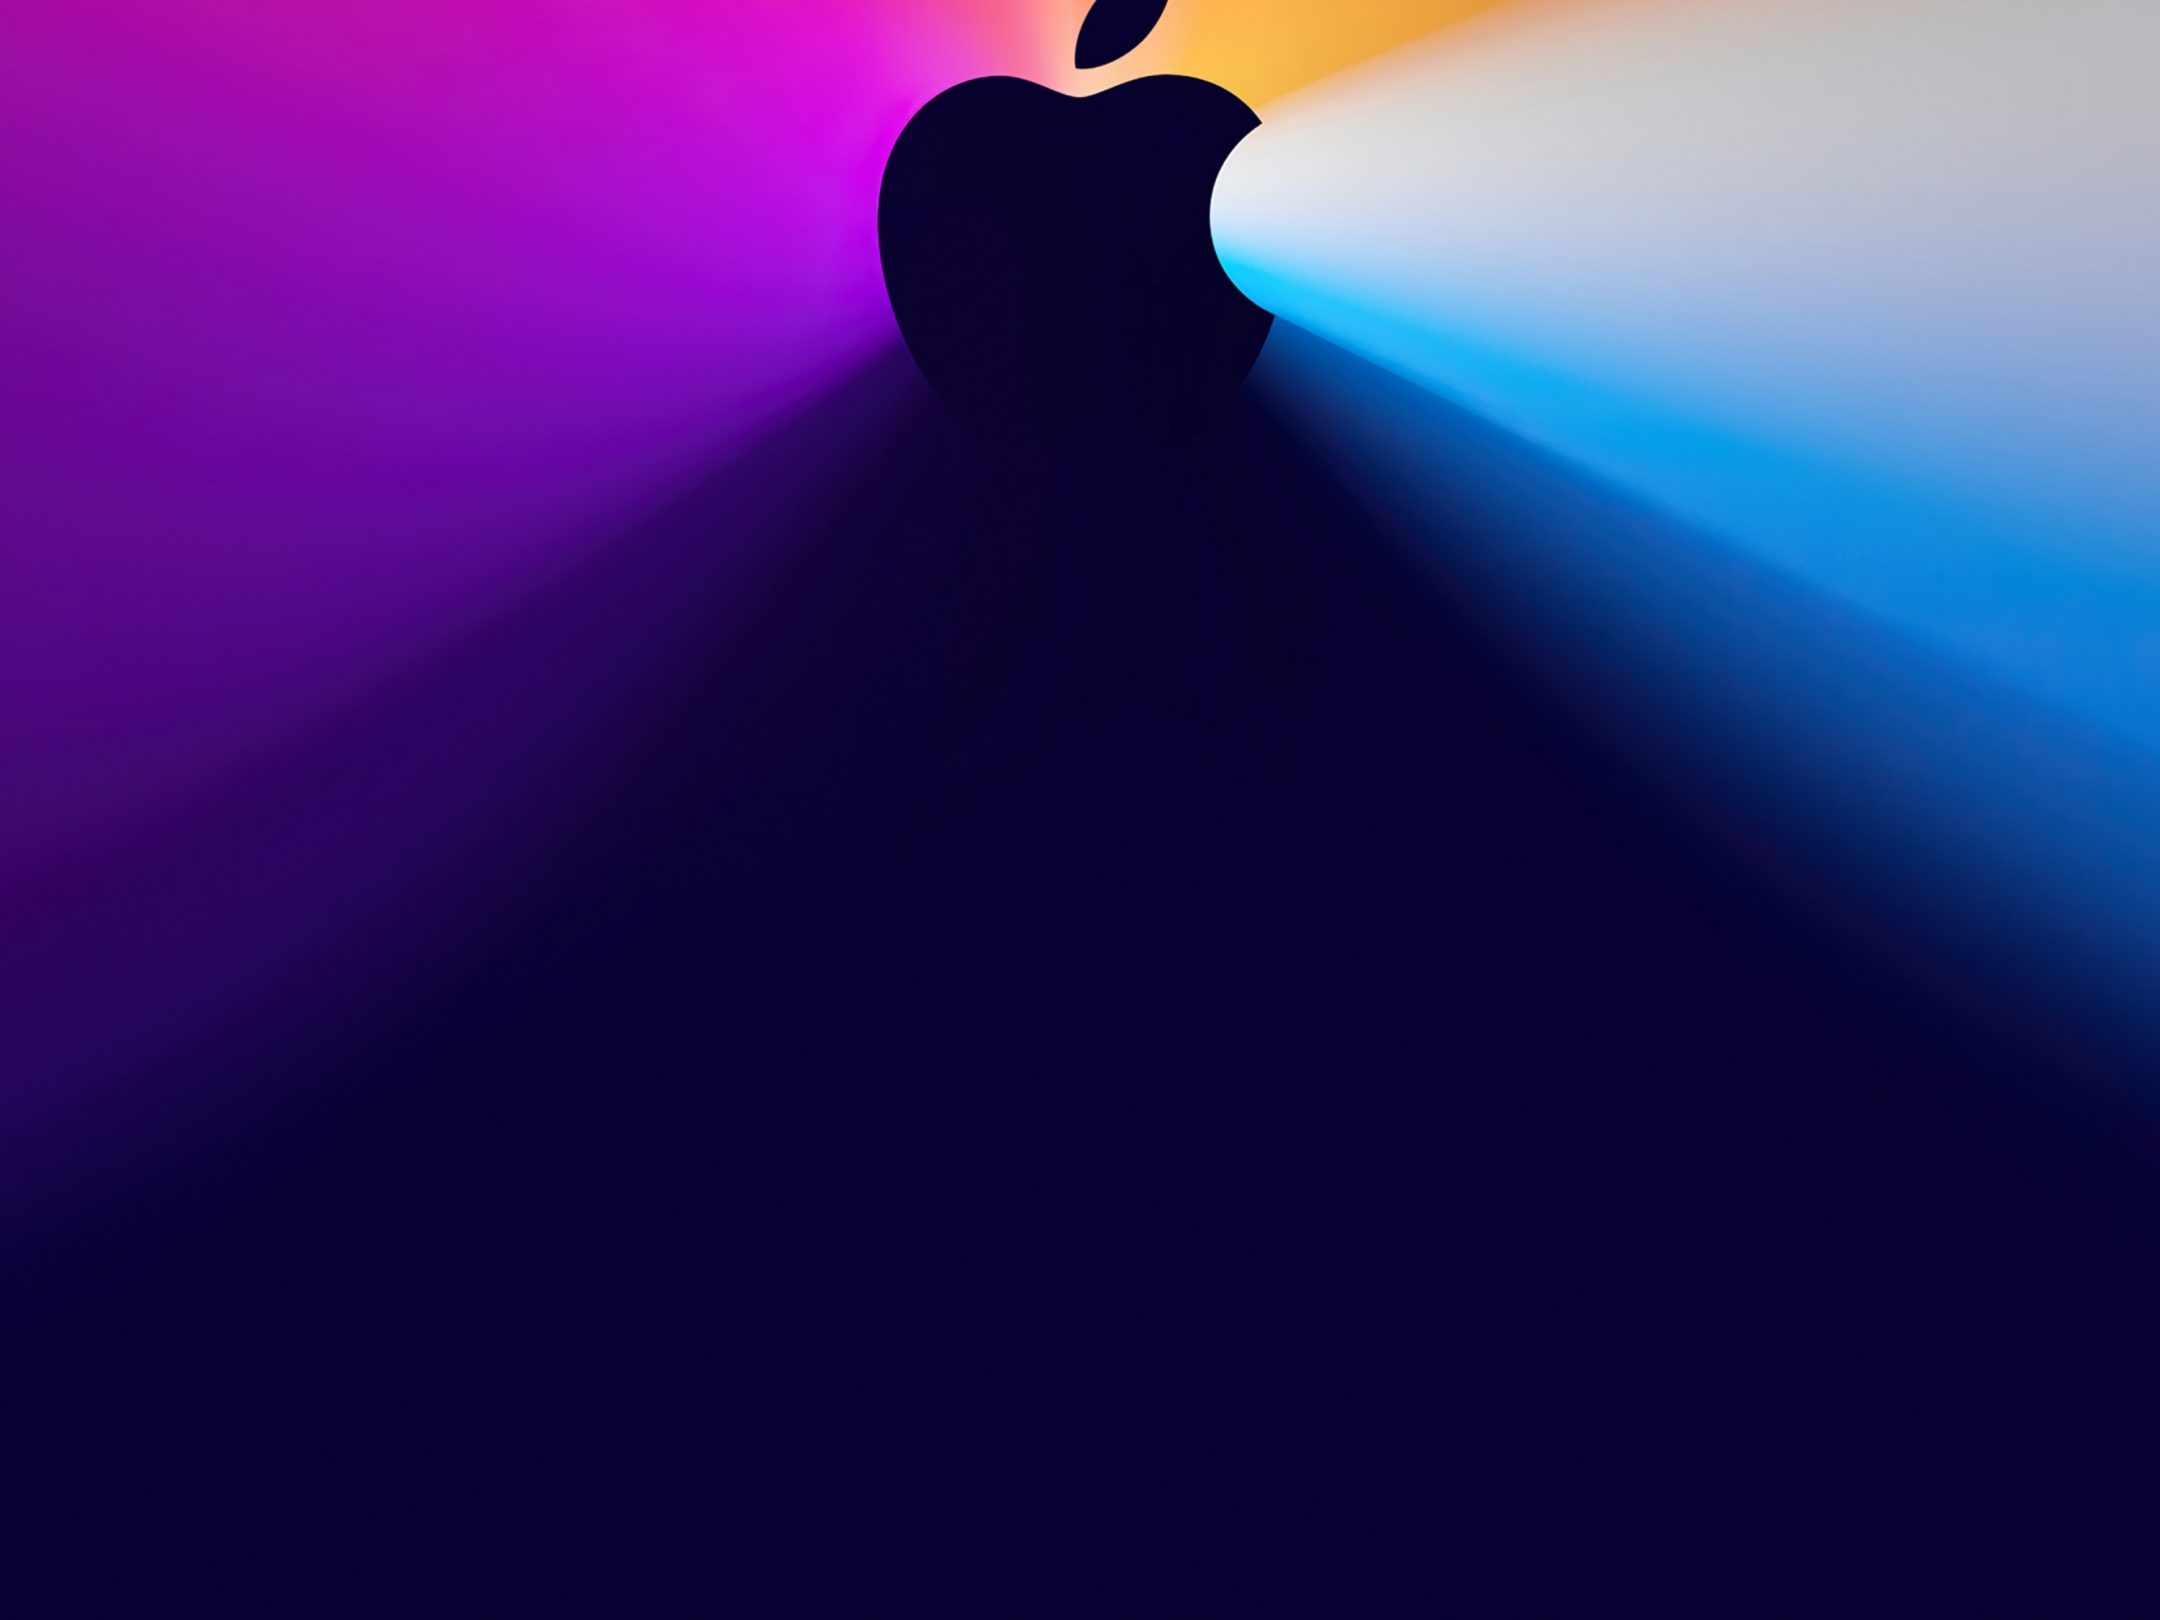 2160x1620 iPad wallpaper 4k Colourful iPhone 12 Apple Logo iPad Wallpaper 2160x1620 pixels resolution